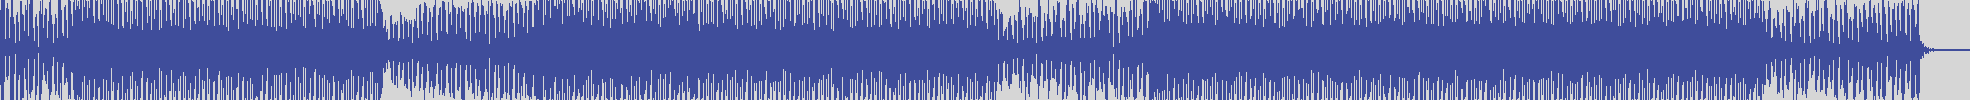 nf_boyz_records [NFY068] Broadway Corona - Band Switch [Avant Mann Mix] audio wave form